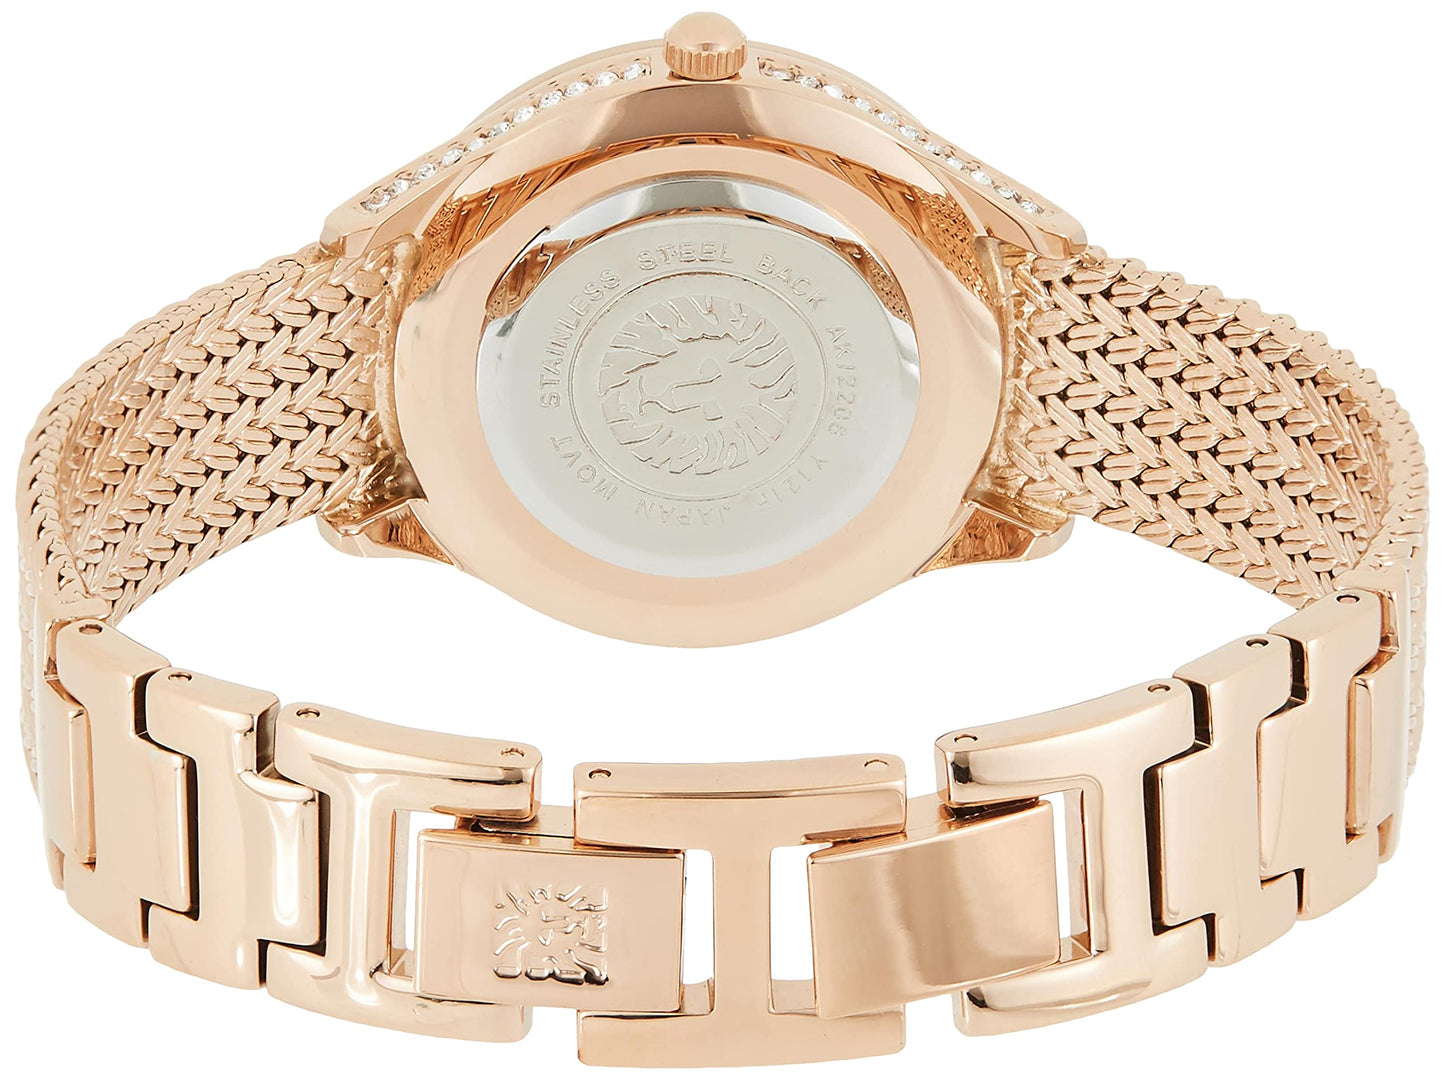 Anne Klein New York Swarovski Crystal Analogue Rose Gold Dial Mesh Women's Bracelet Watch